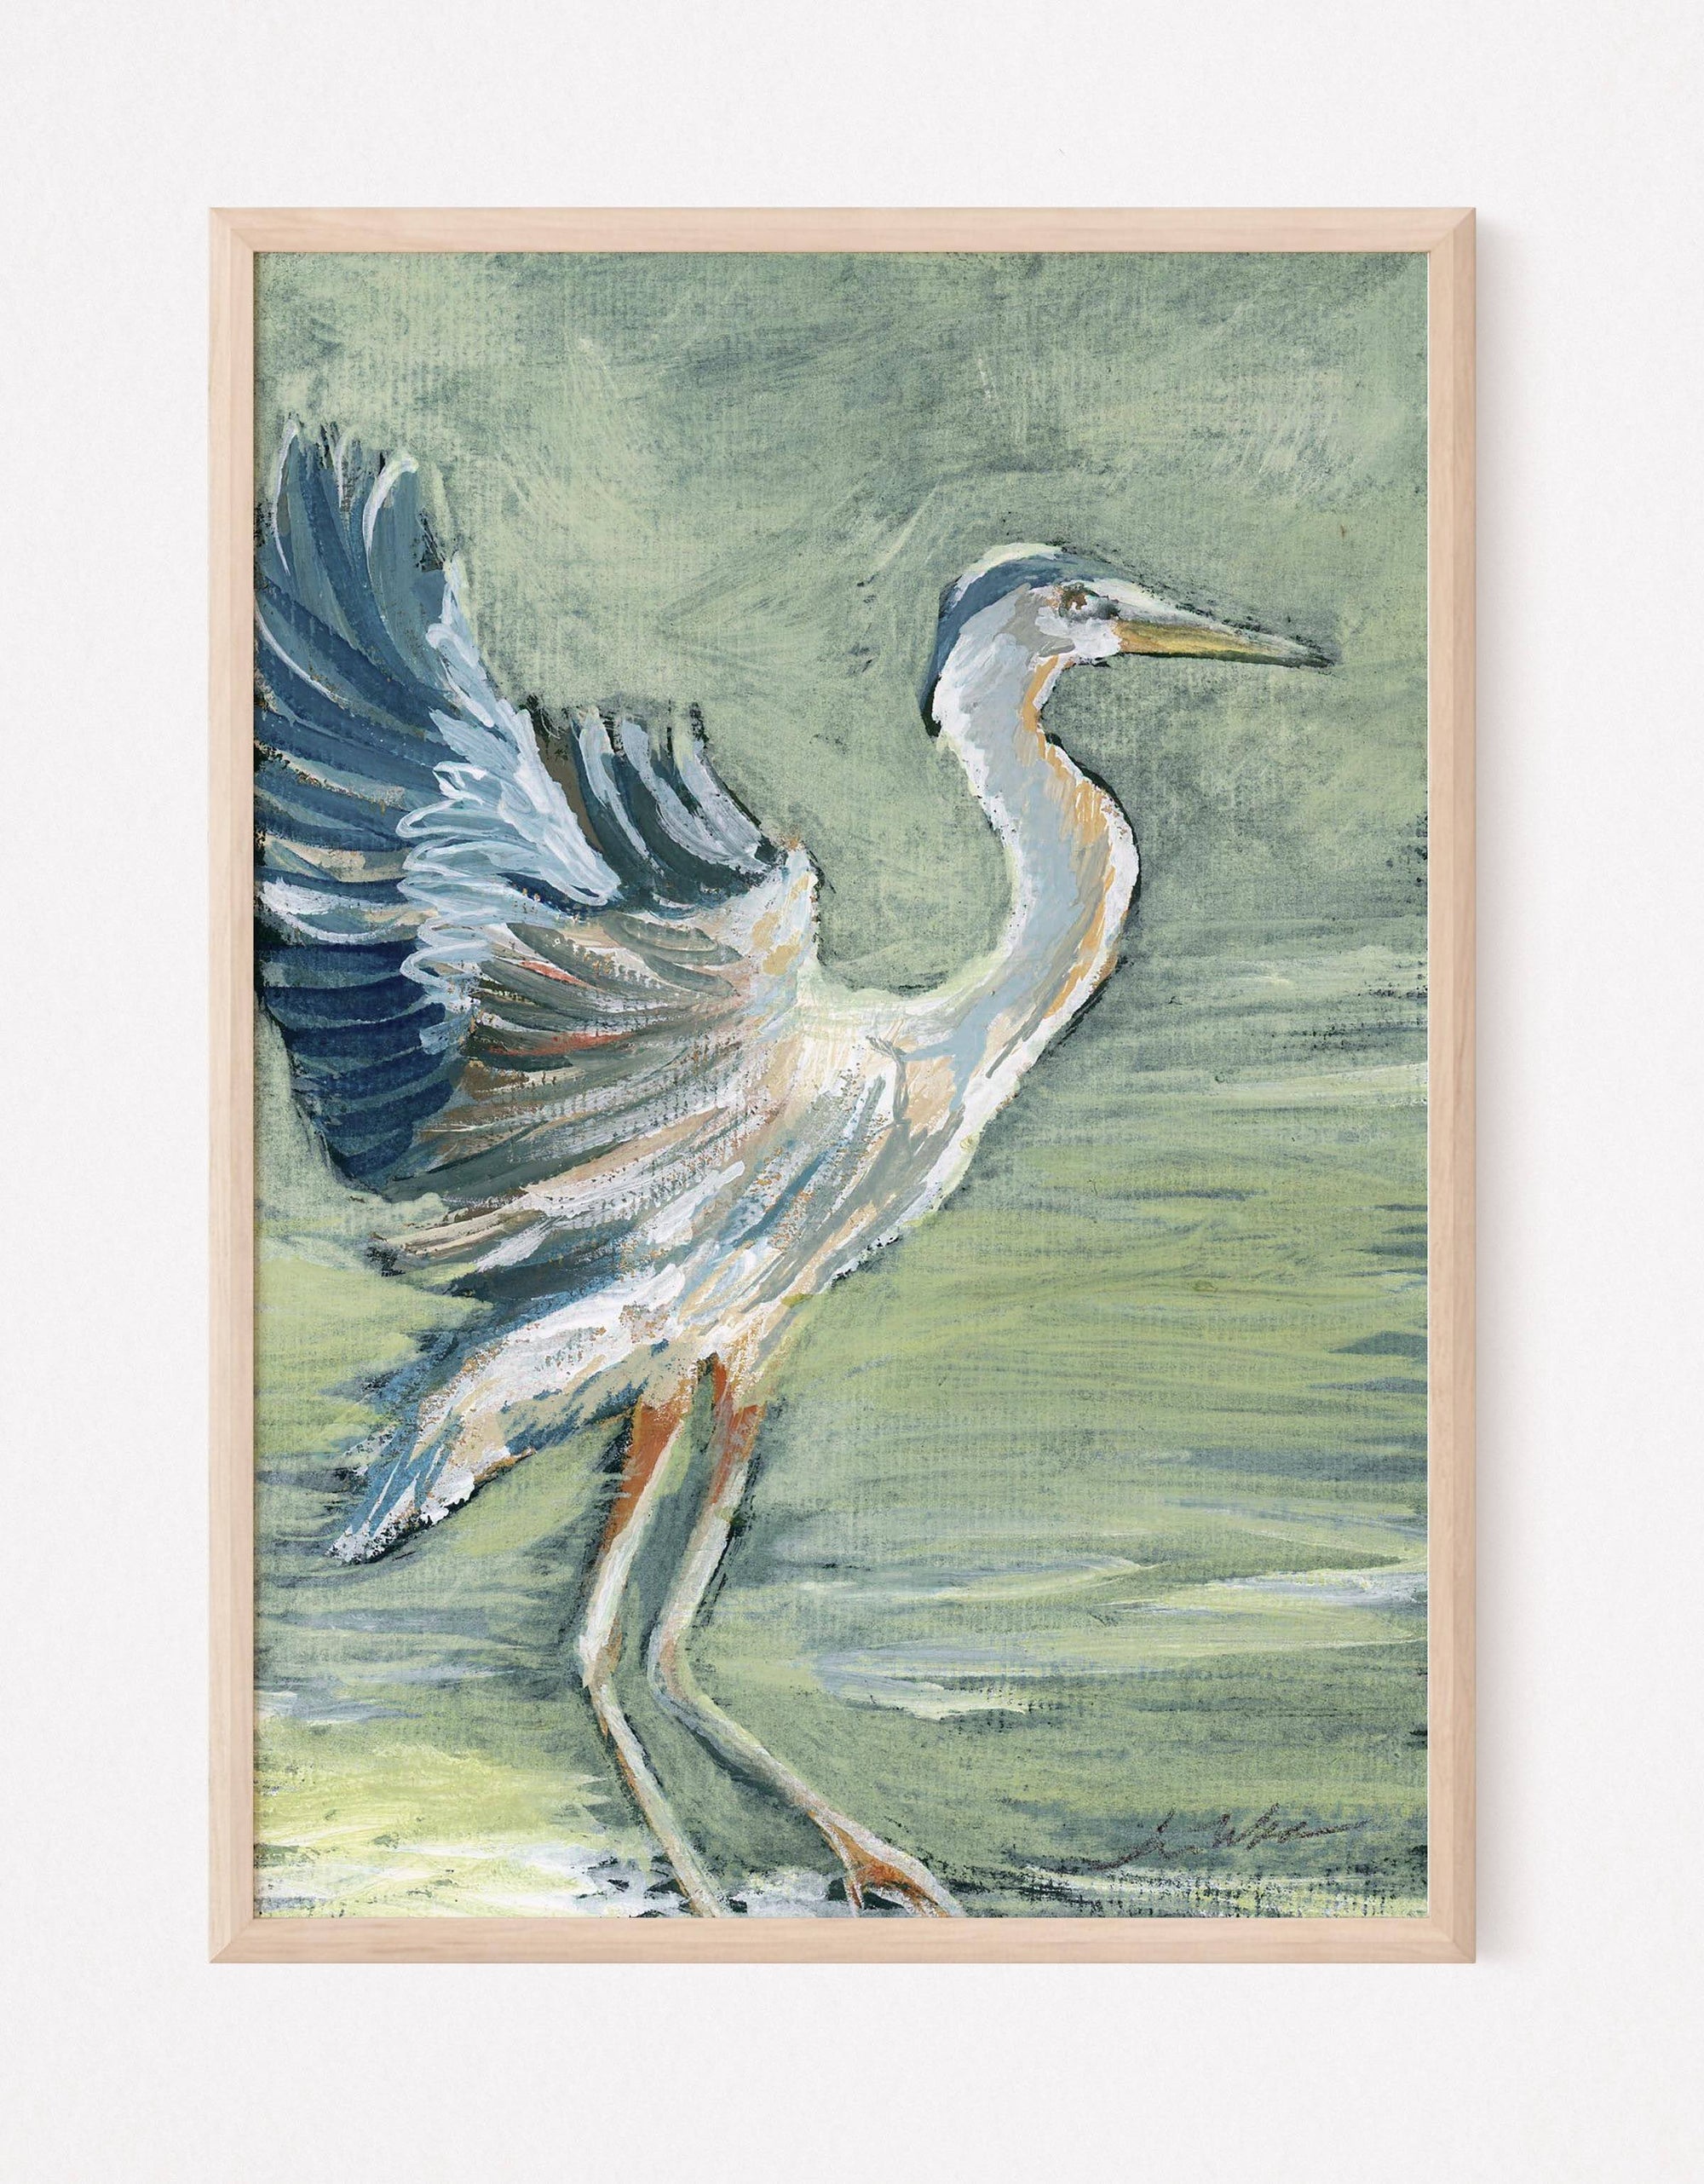 Josephine, a Blue Heron Vertical Print